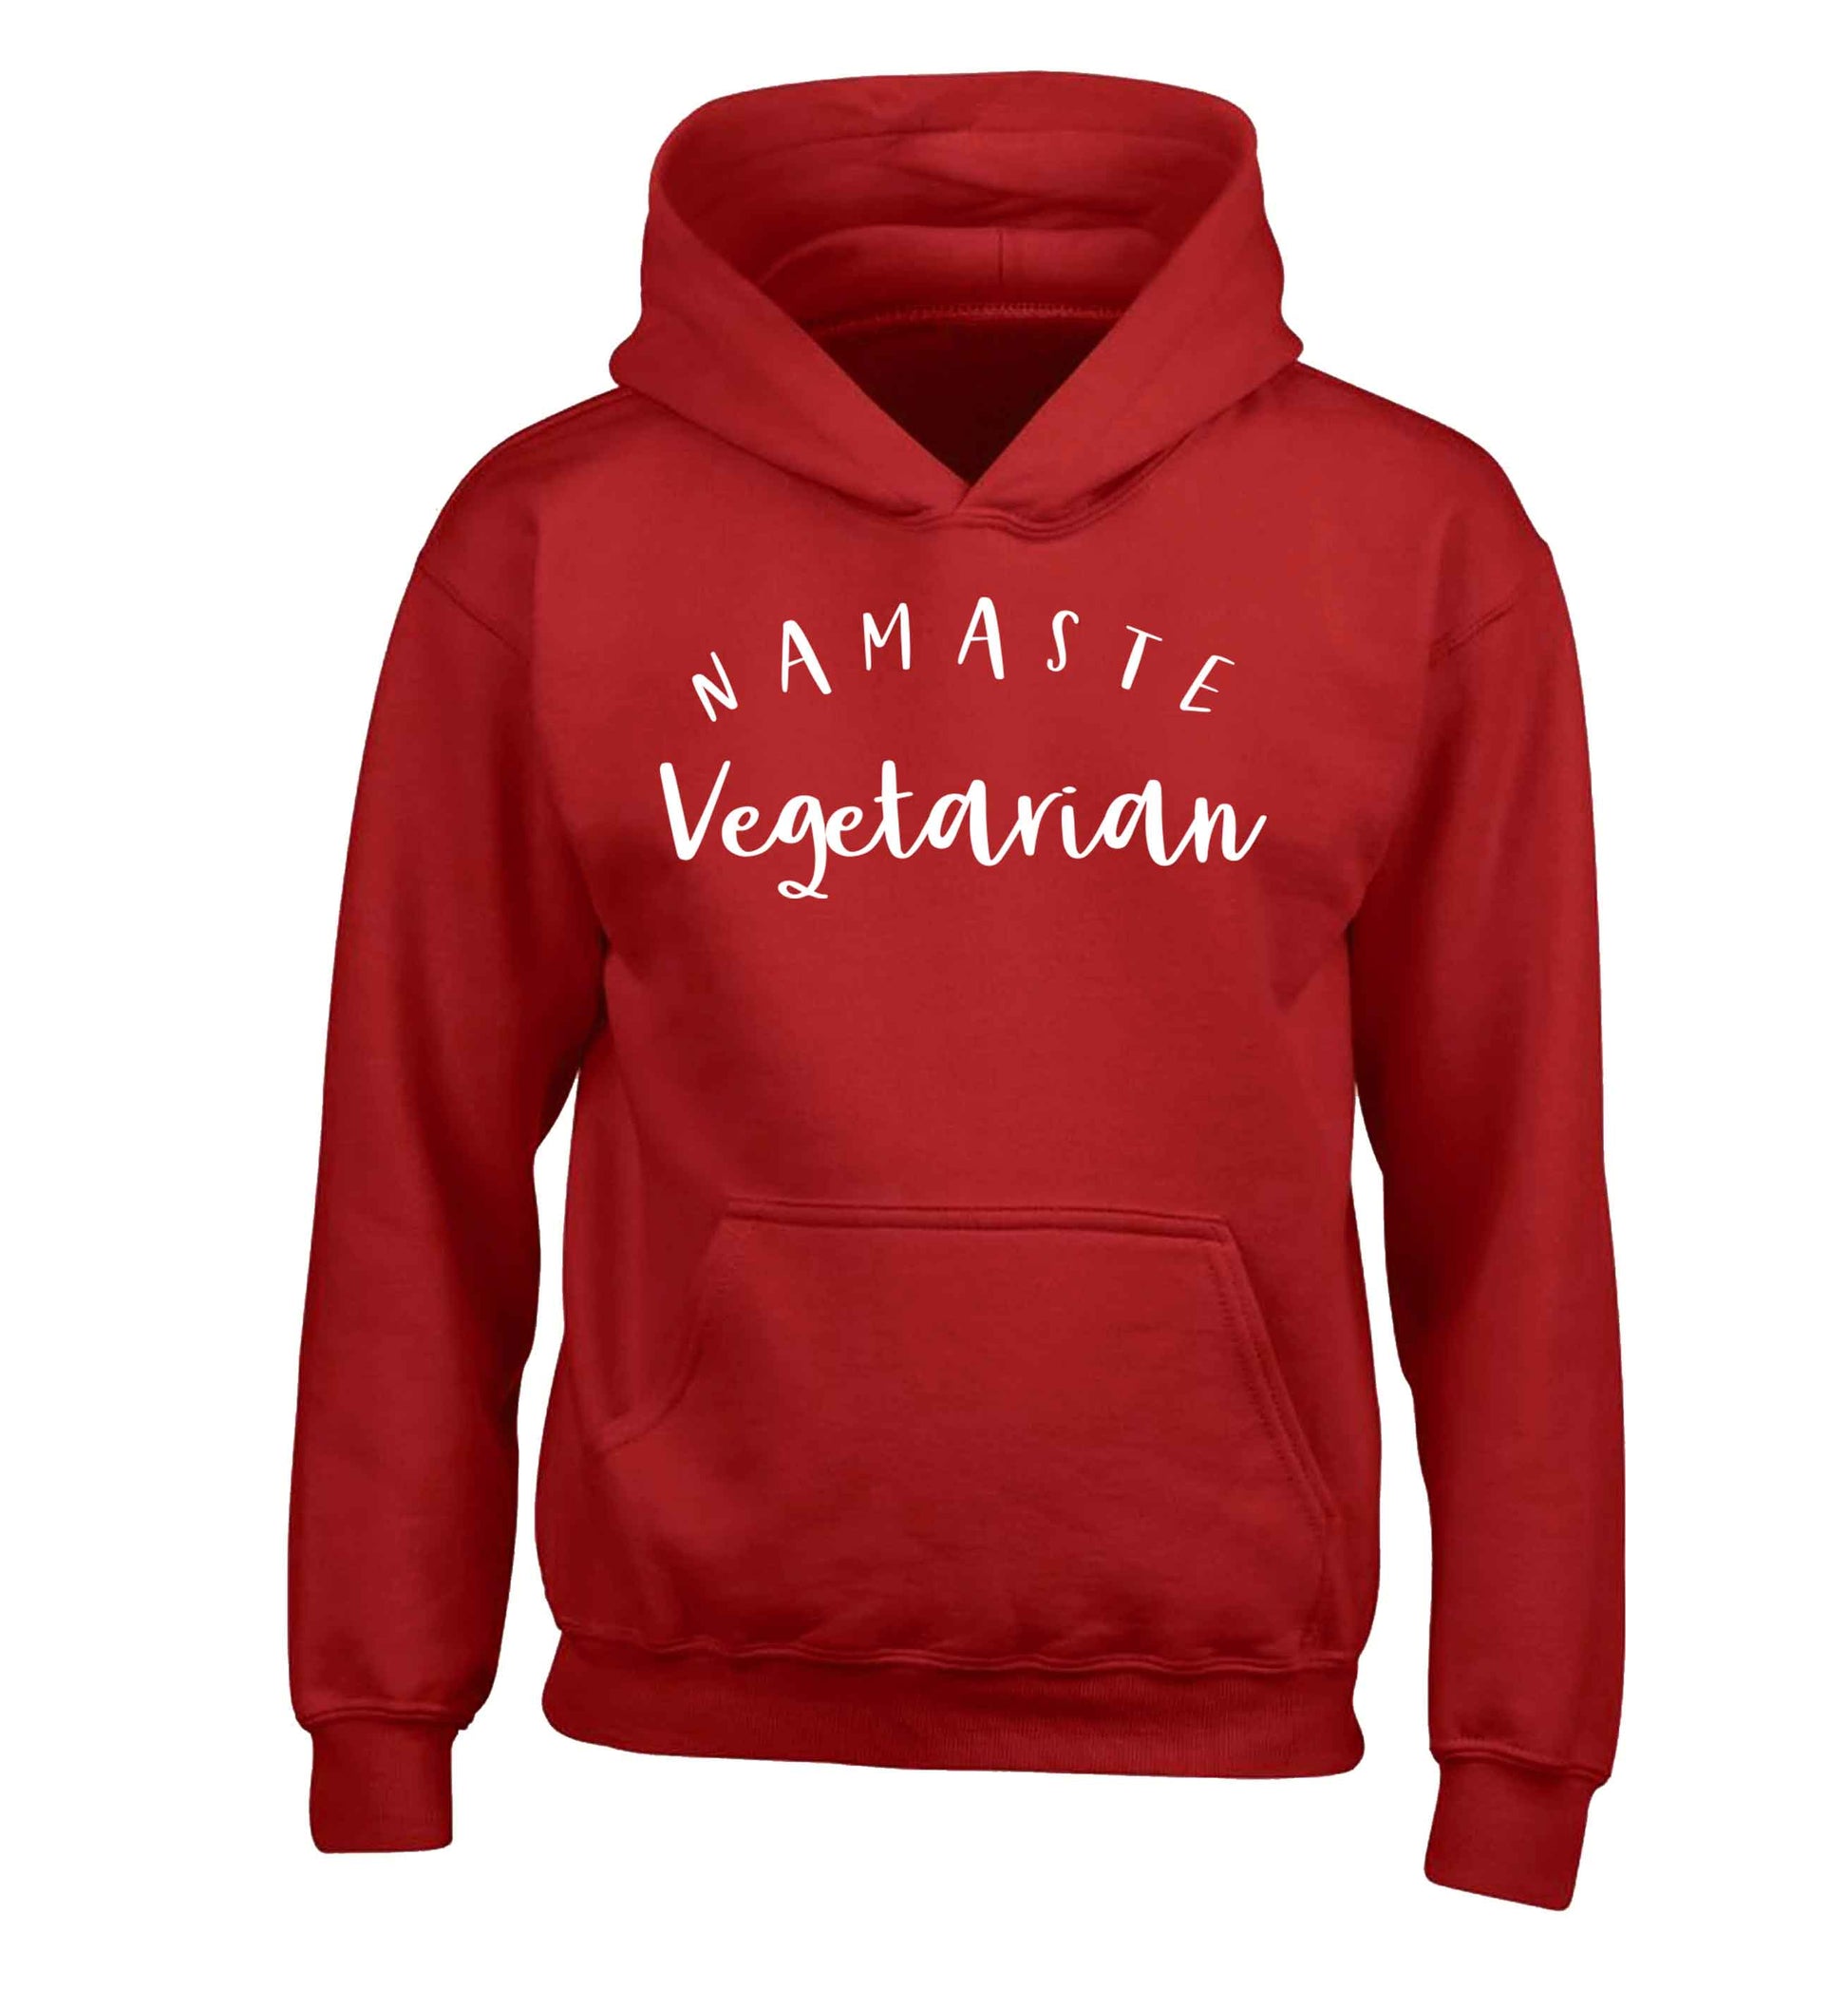 Namaste vegetarian children's red hoodie 12-13 Years